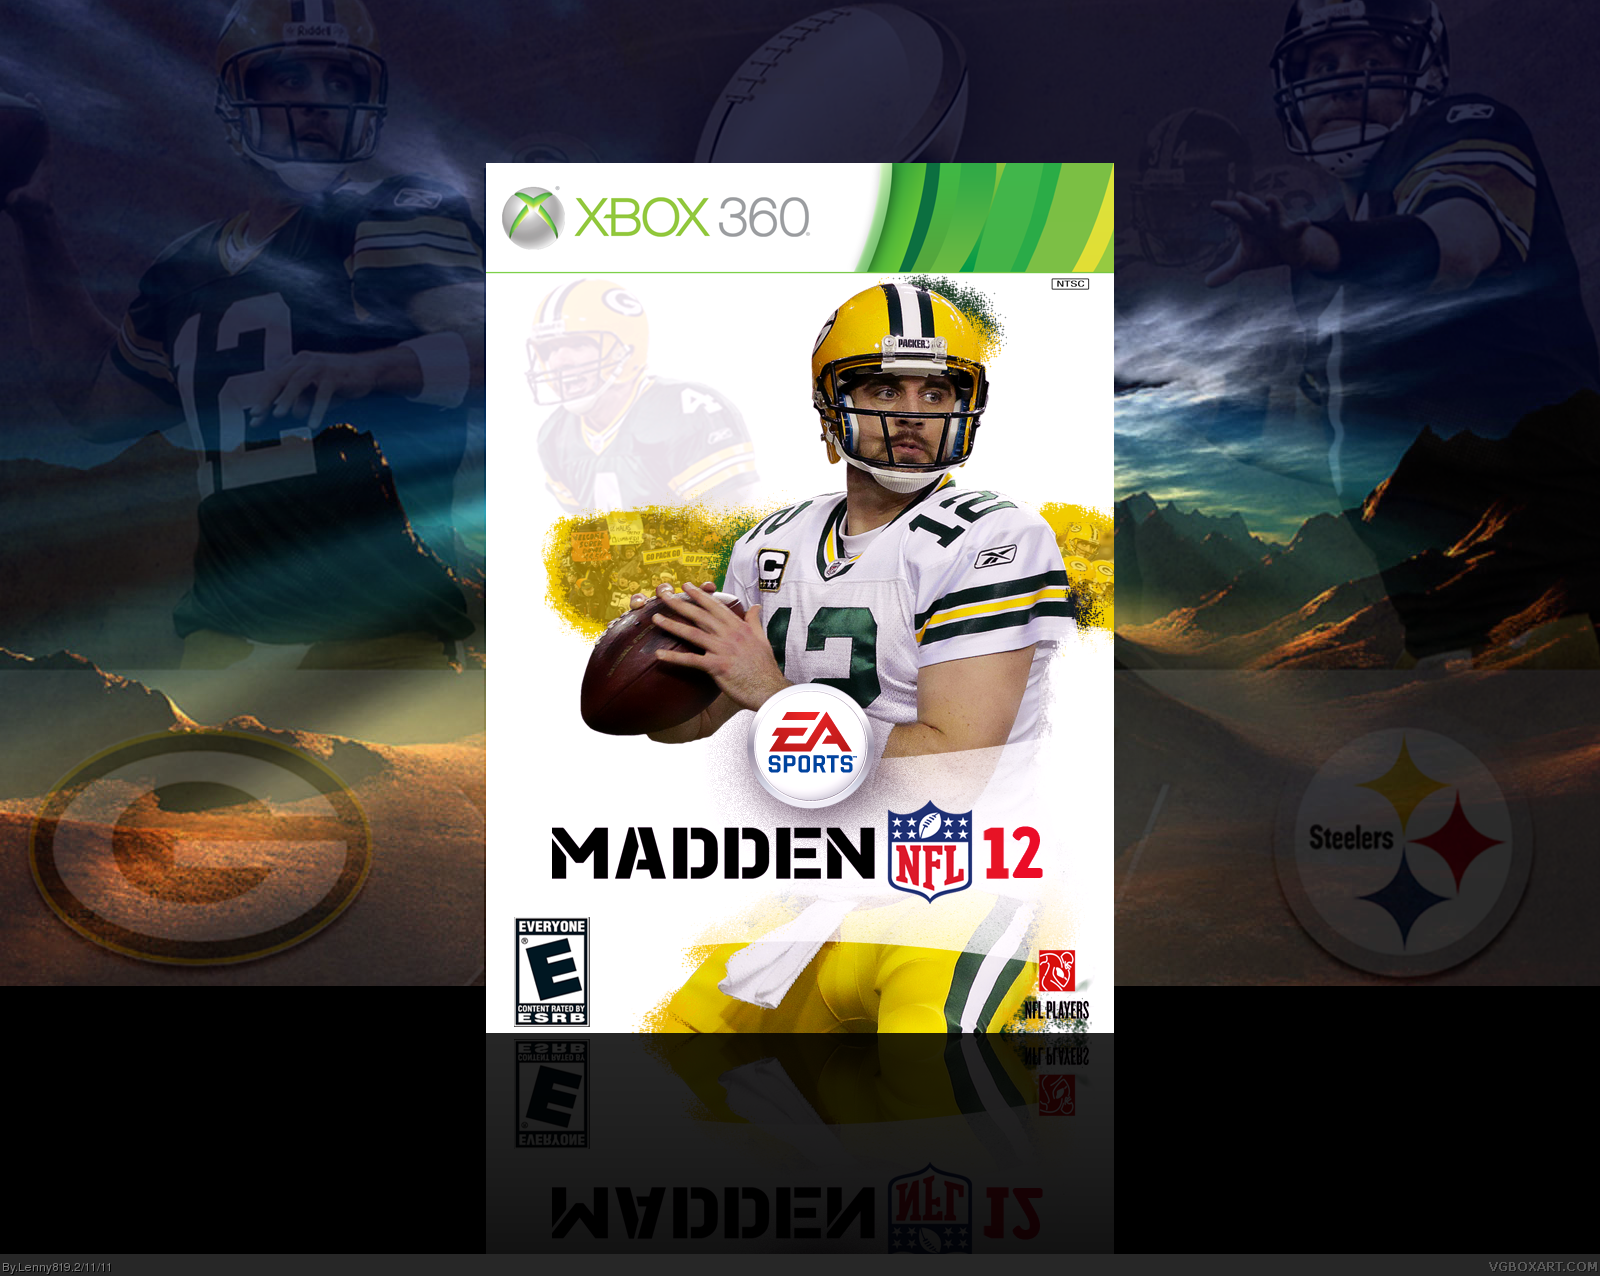 Madden NFL 12 box cover